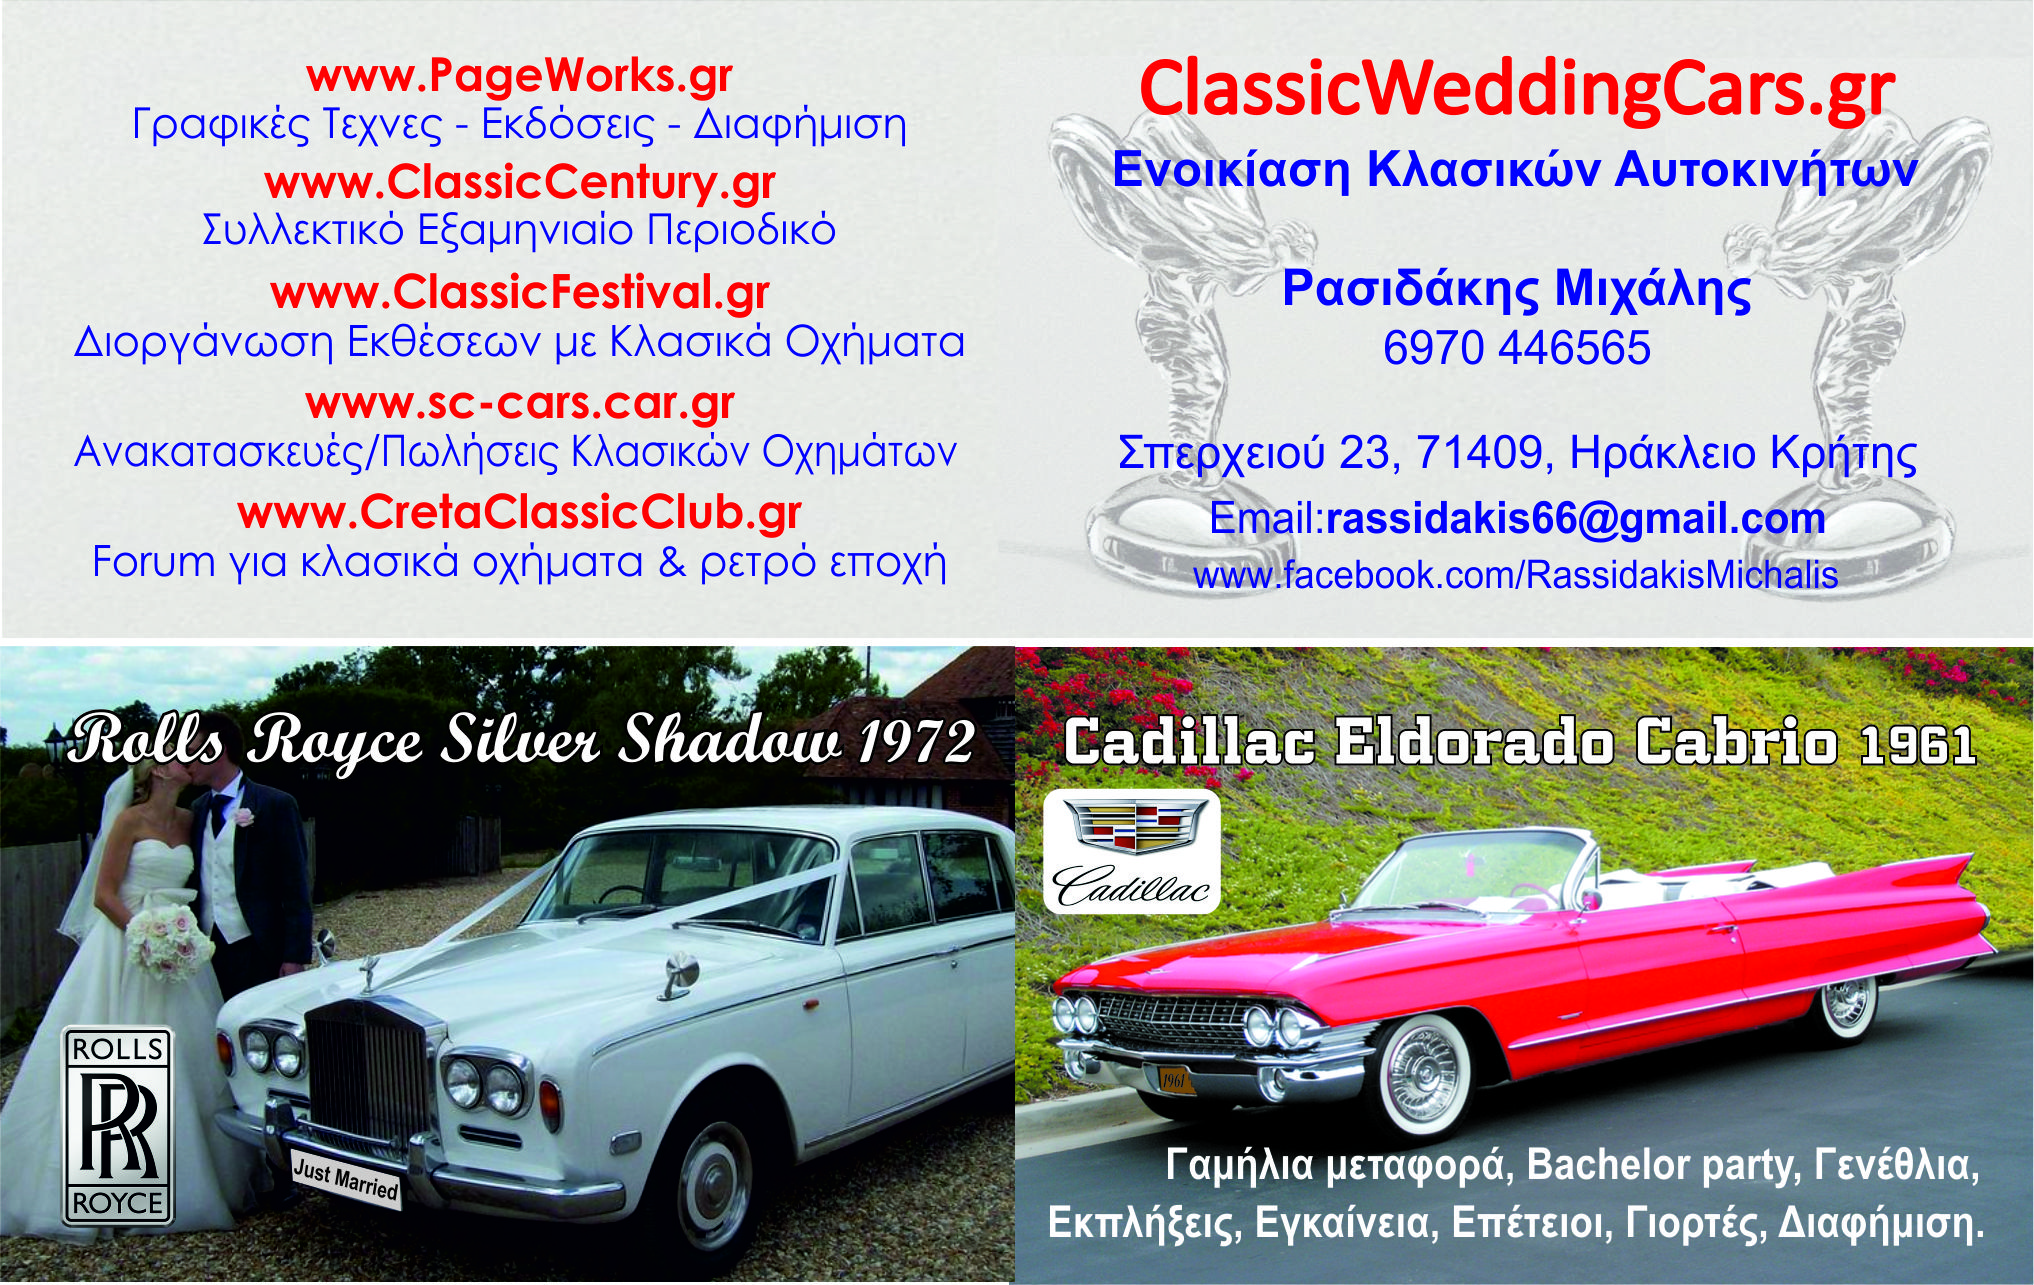 CLASSIC WEDDING CARS - ΜΙΧΑΛΗΣ ΡΑΣΙΔΑΚΗΣ, Ενοικιαζόμενα αυτοκ.